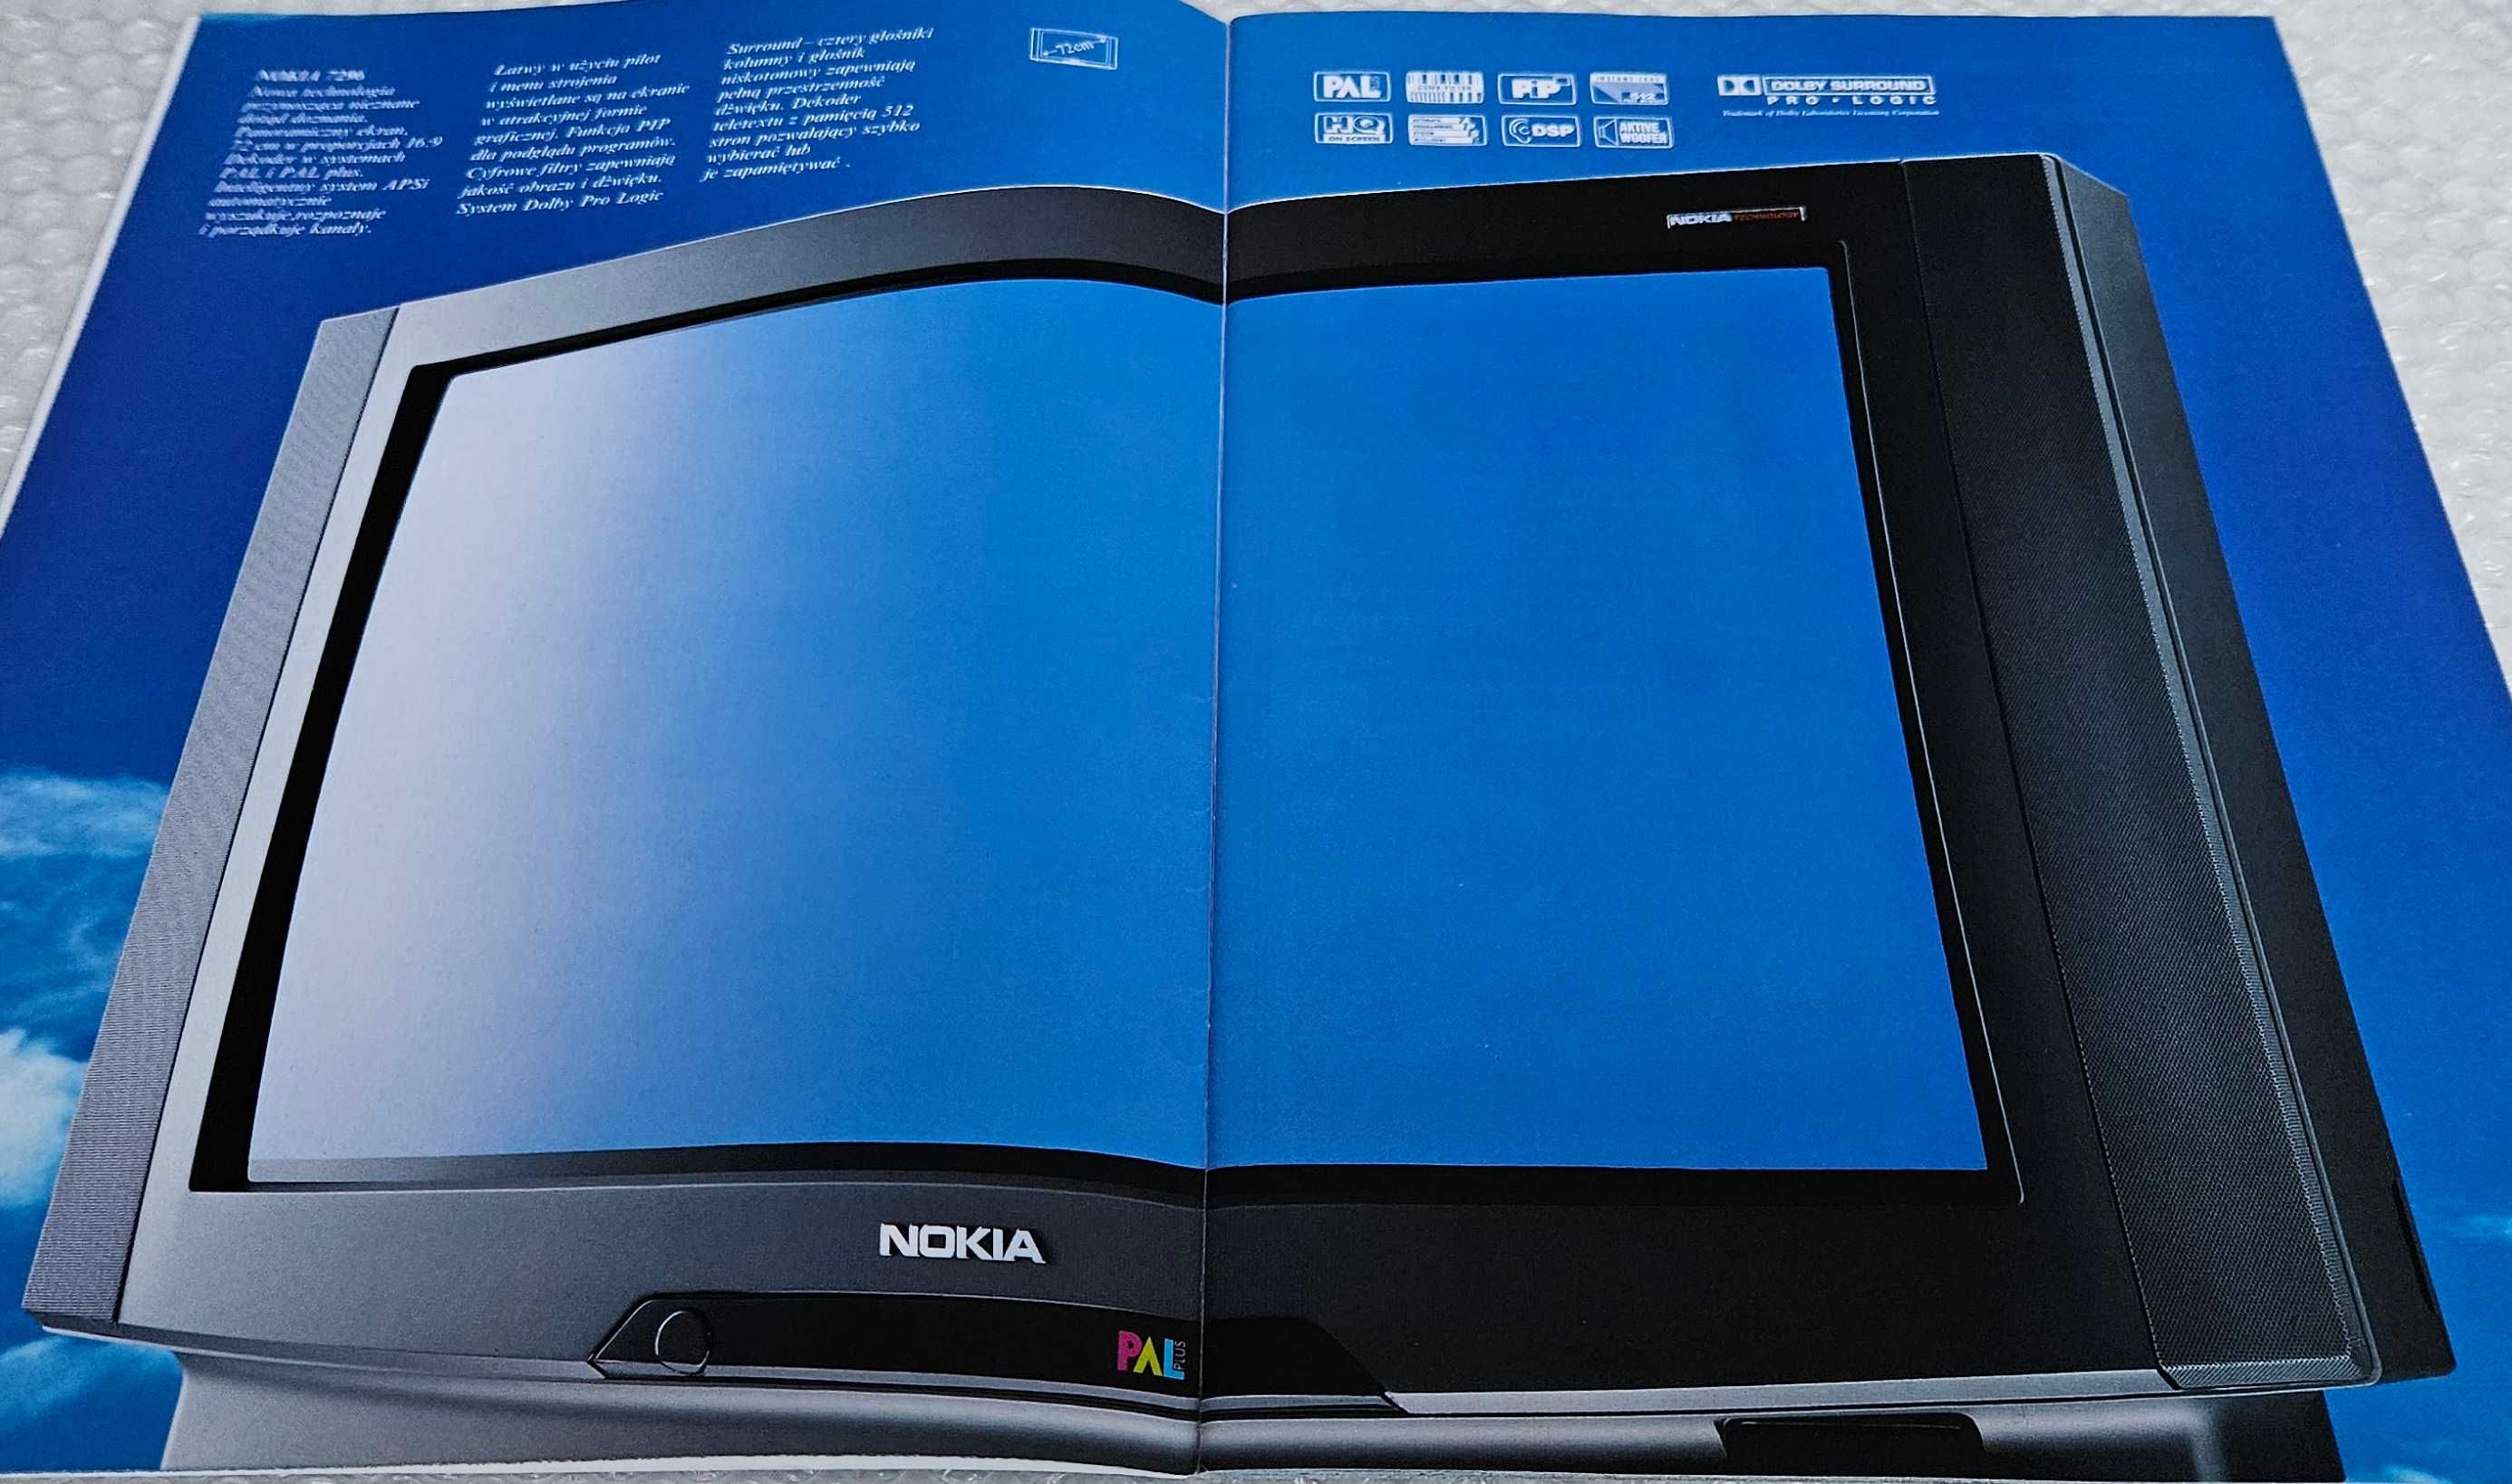 Katalog Nokia Connecting People 1994 - 95